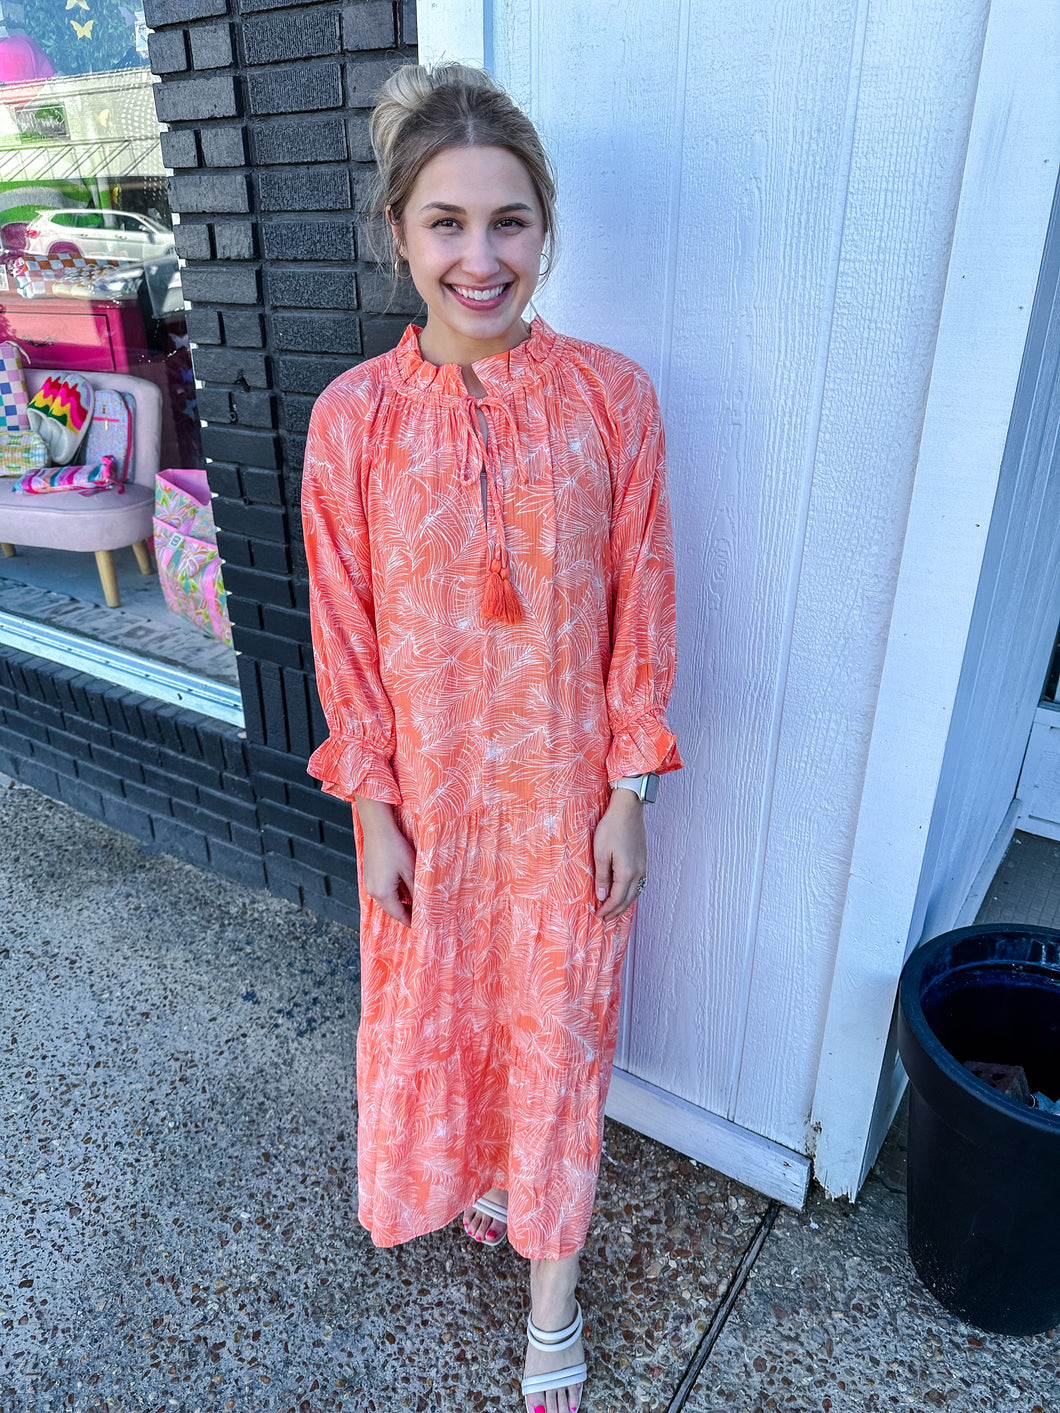 Tangerine Midi Dress